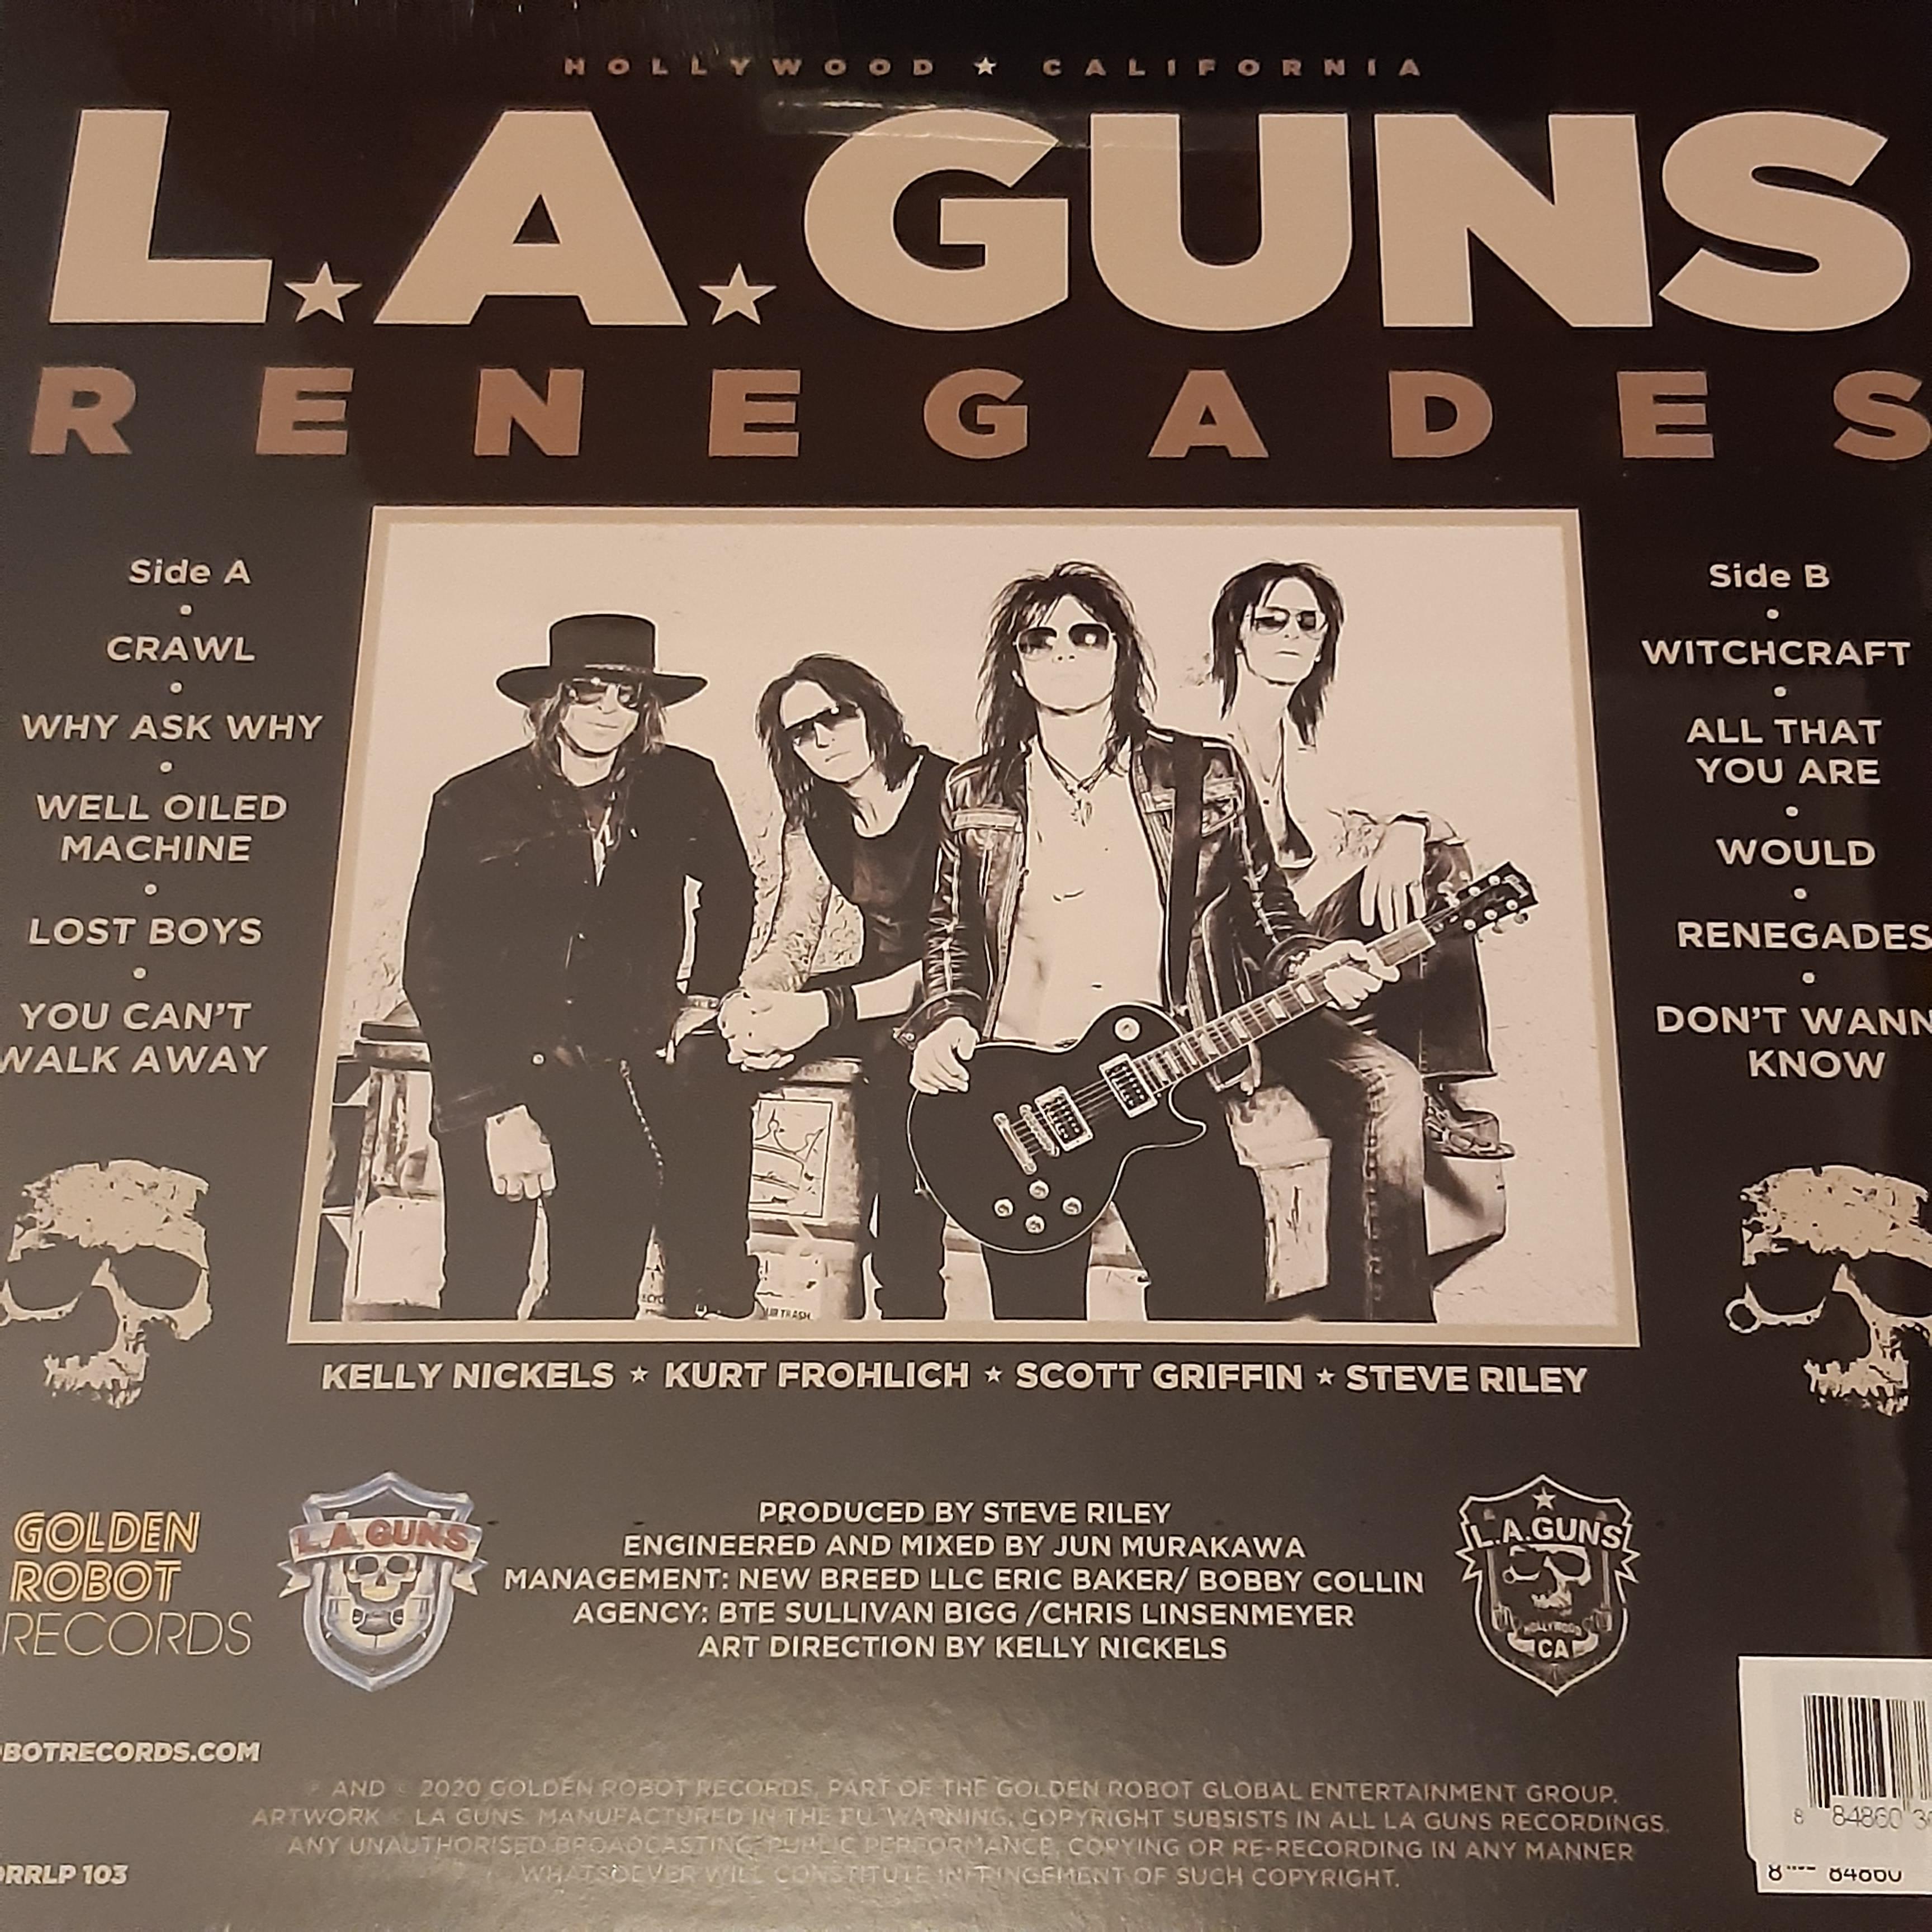 L.A. Guns - Renegades - LP (uusi)